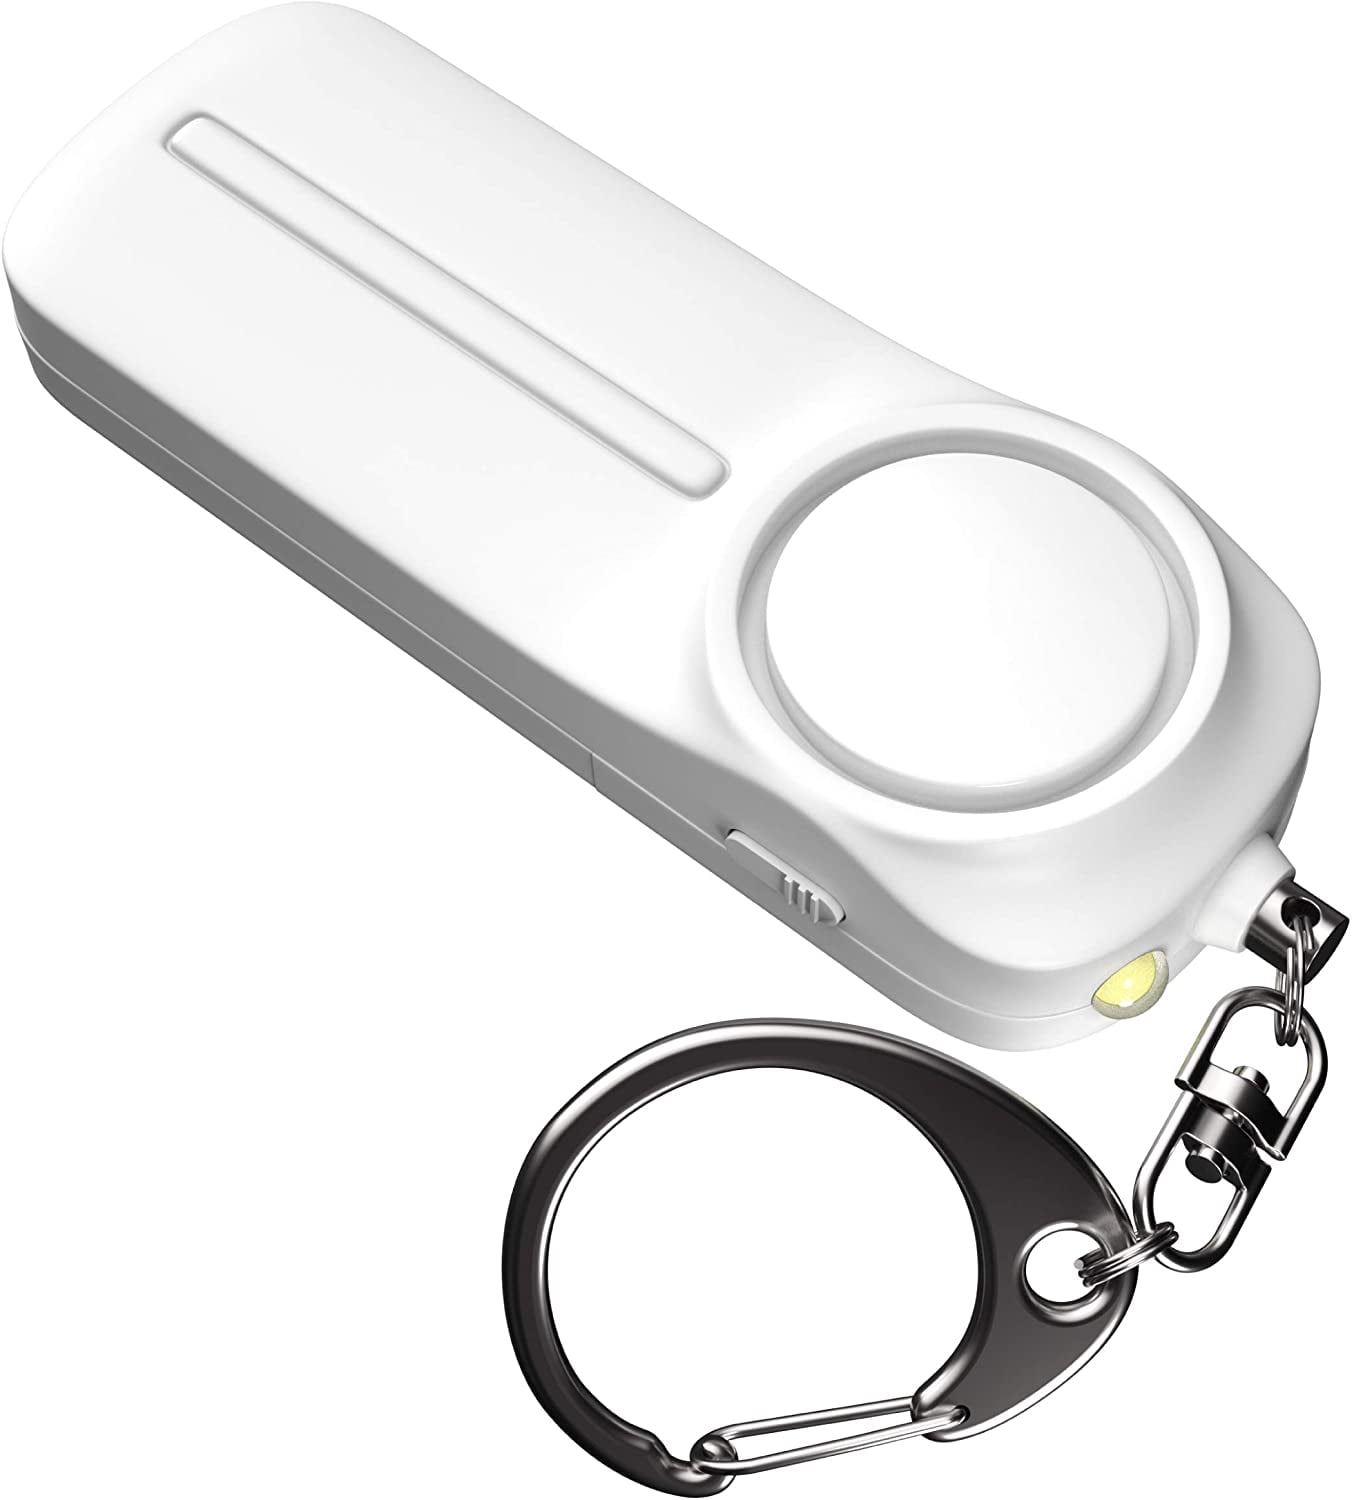 130db Safe Sound Personal Alarm Keychain Self-Defense Loud Alert LED Light Siren 